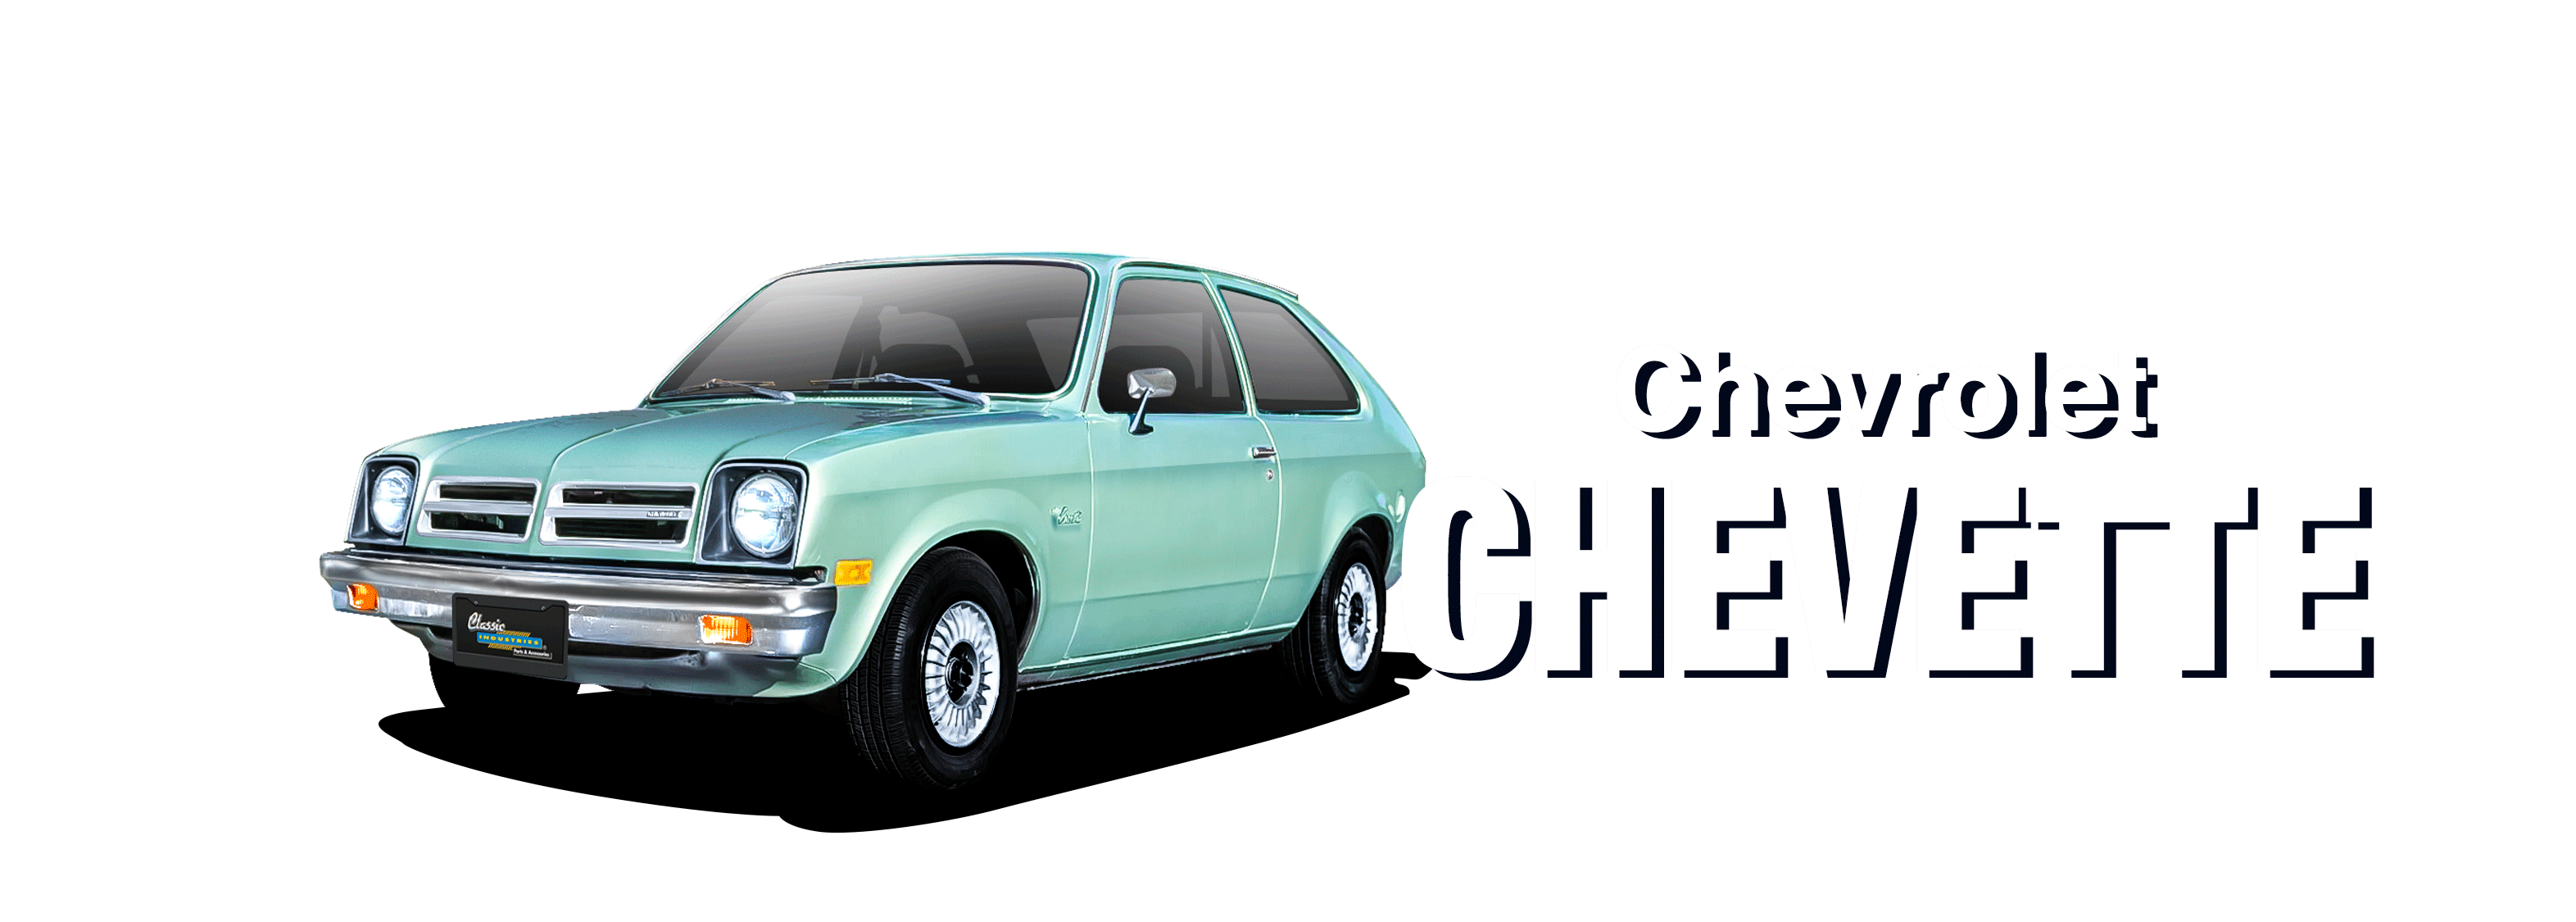 Chevrolet-Chevette-vehicle-desktop